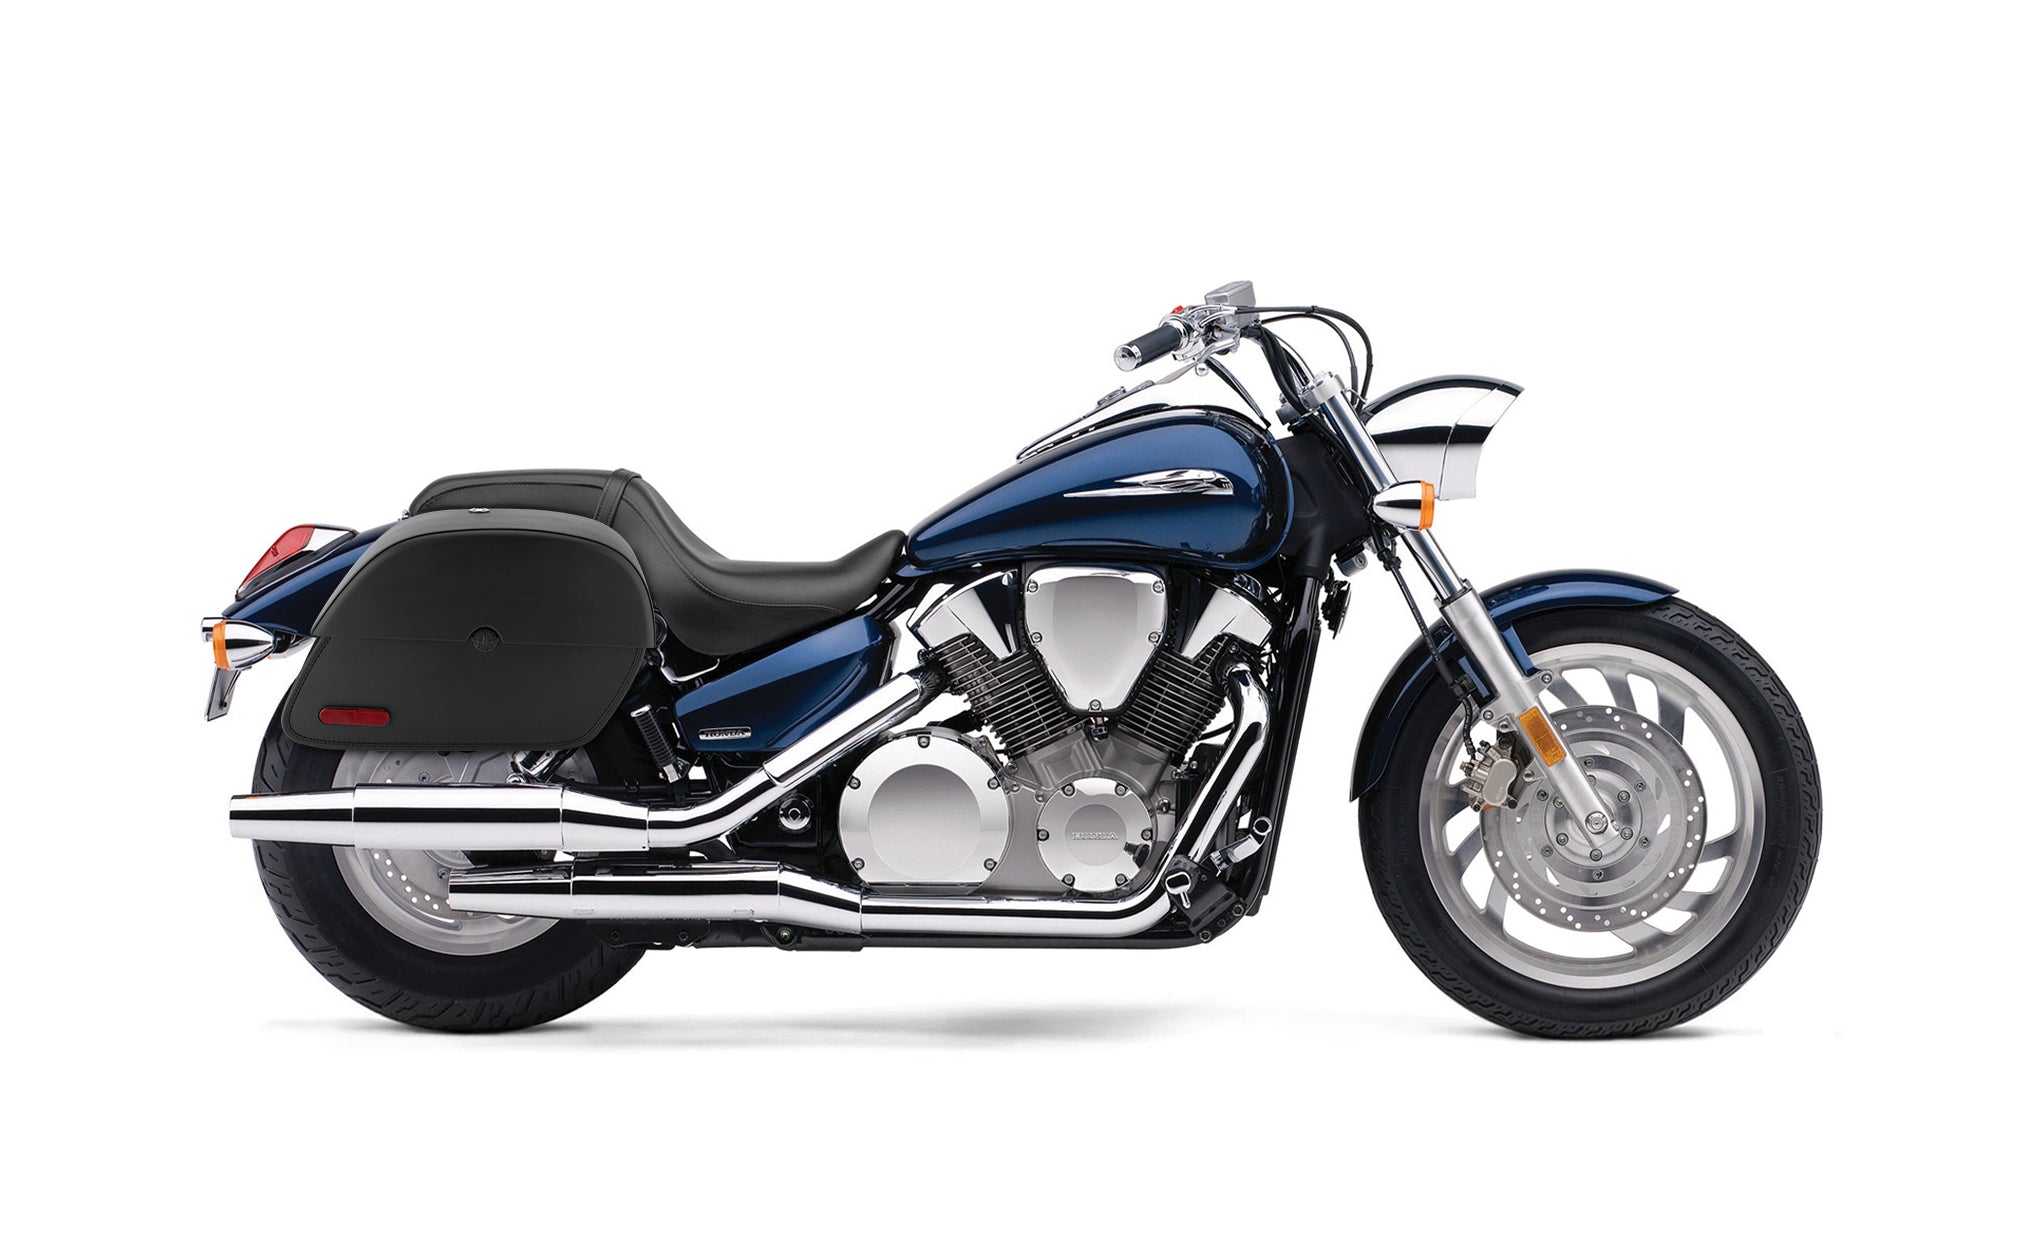 Viking Panzer Medium Honda Vtx 1300 C Leather Motorcycle Saddlebags Engineering Excellence with Bag on Bike @expand